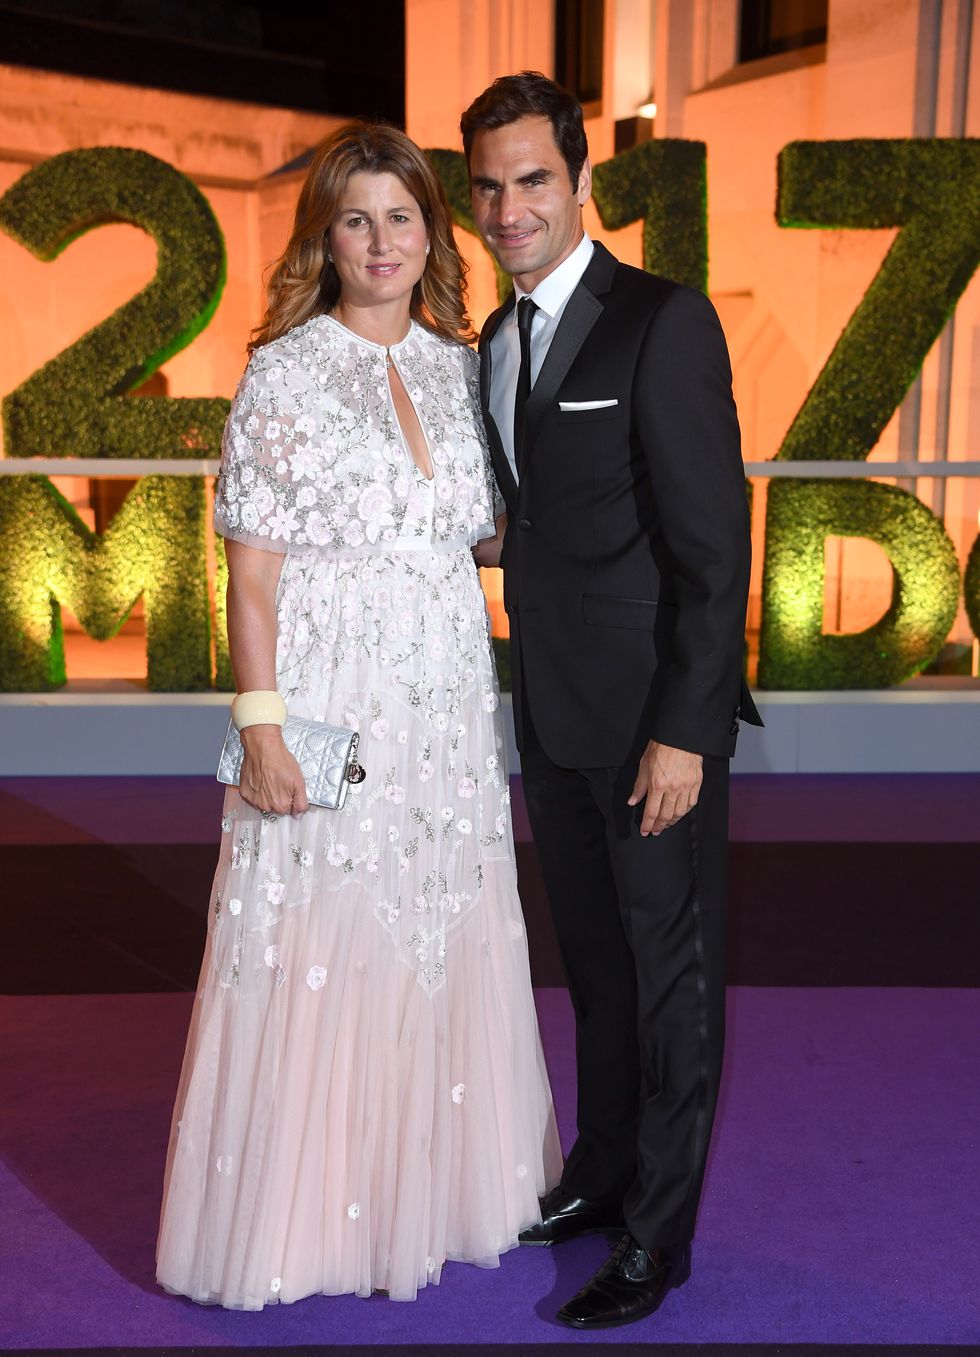 Who Is Roger Federer's Wife Mirka? All About Mirka